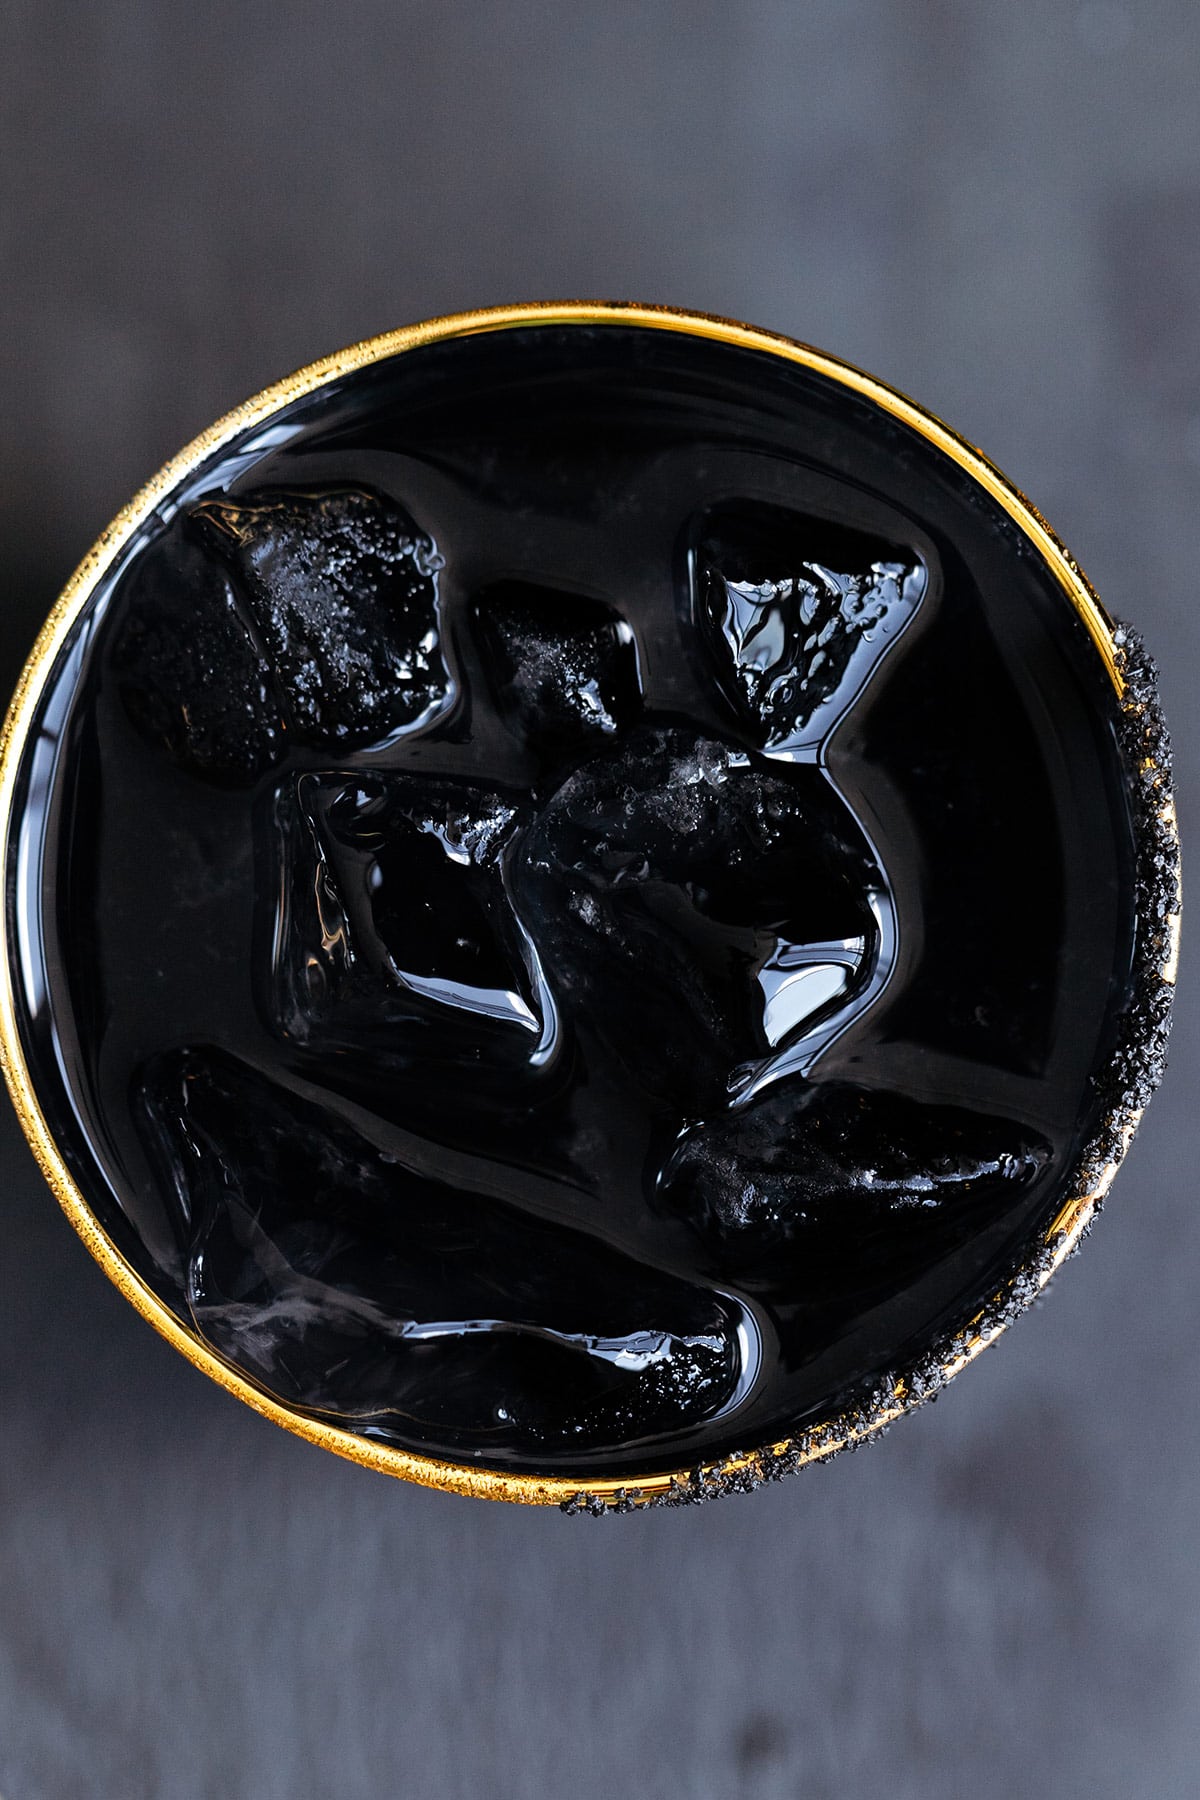 Black margarita with black salt rim on a black background shot from above.